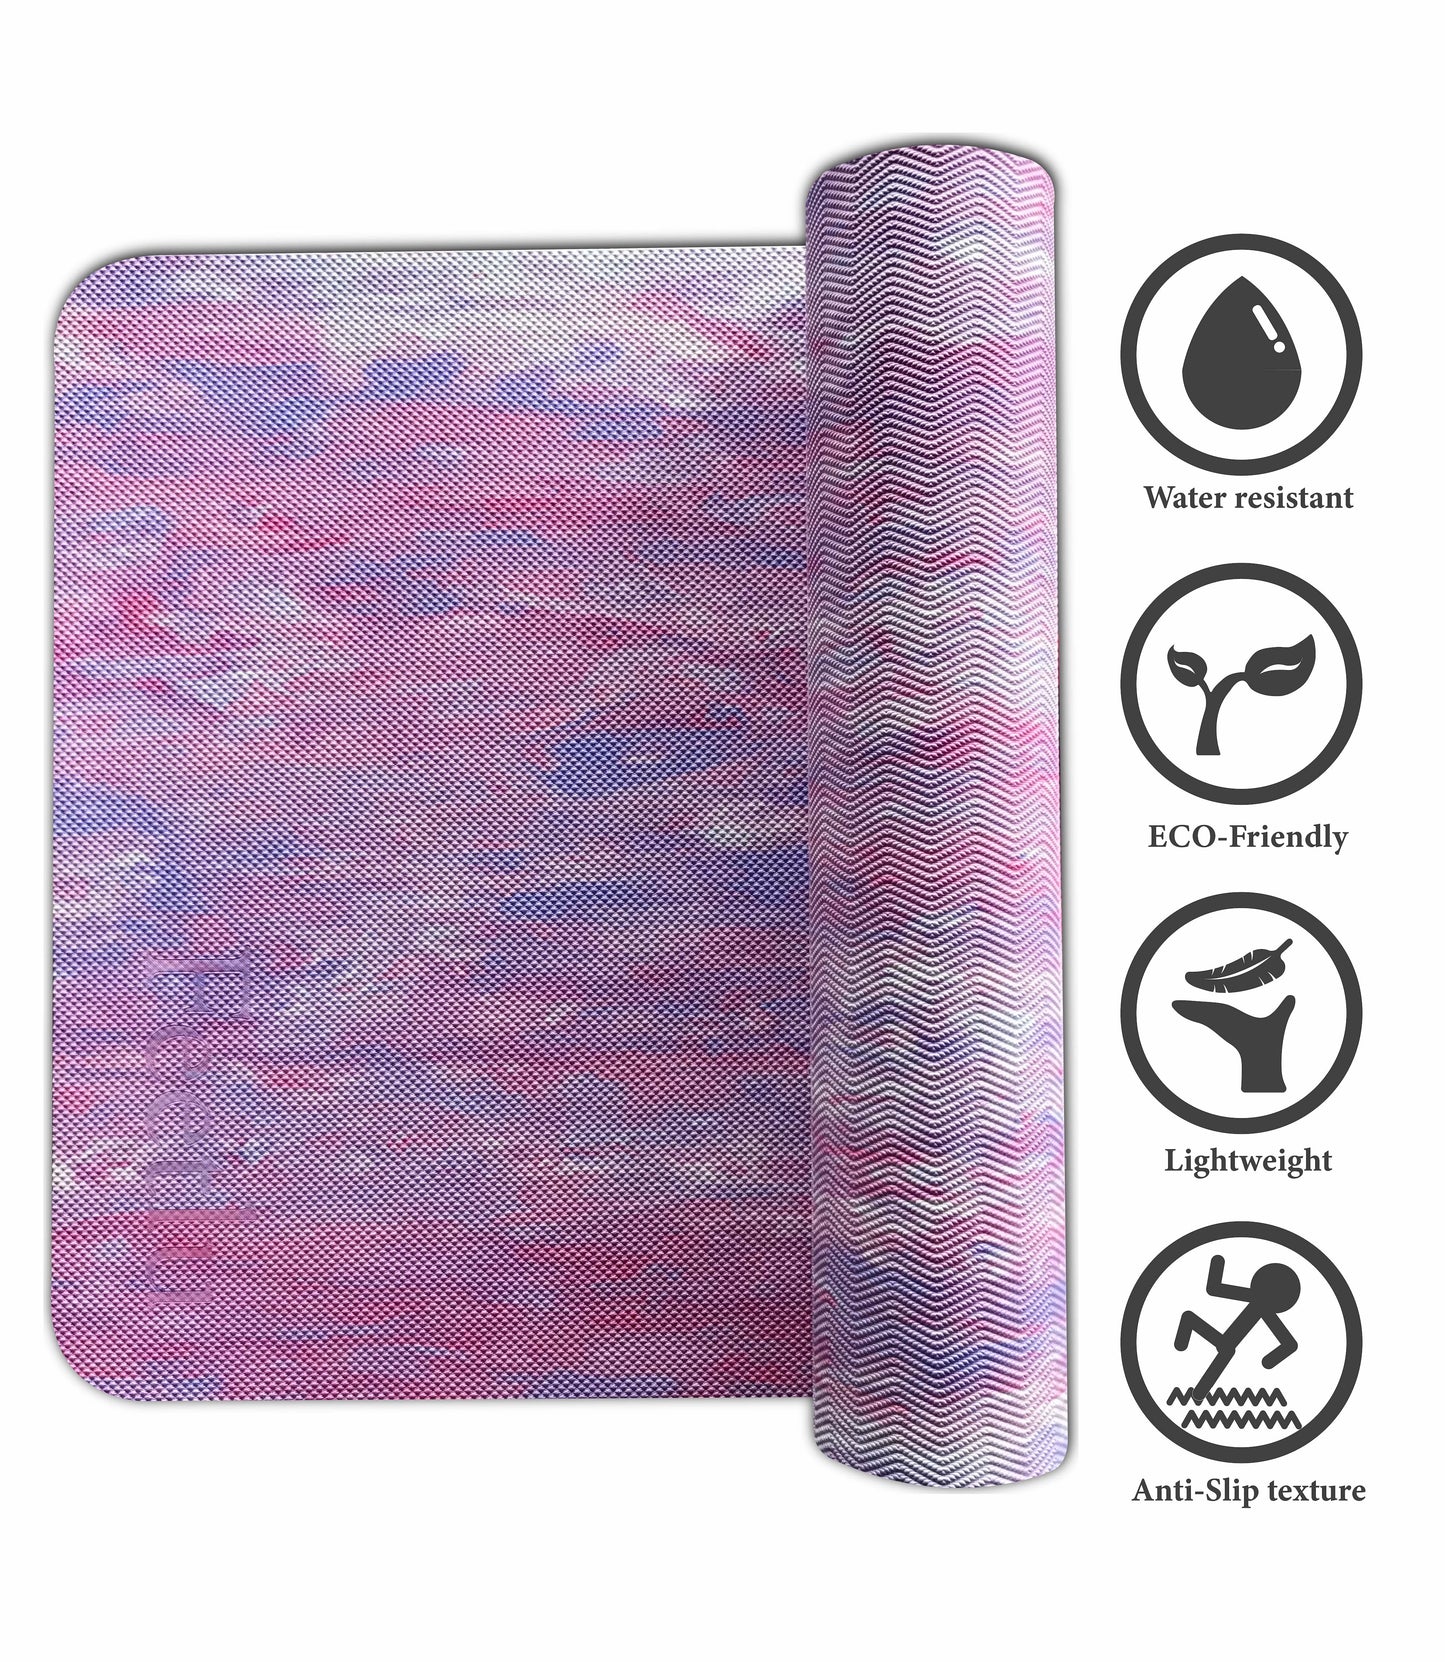 Extra Thick Yoga Mat | Pink and Purple Yoga Mat | Feetlu